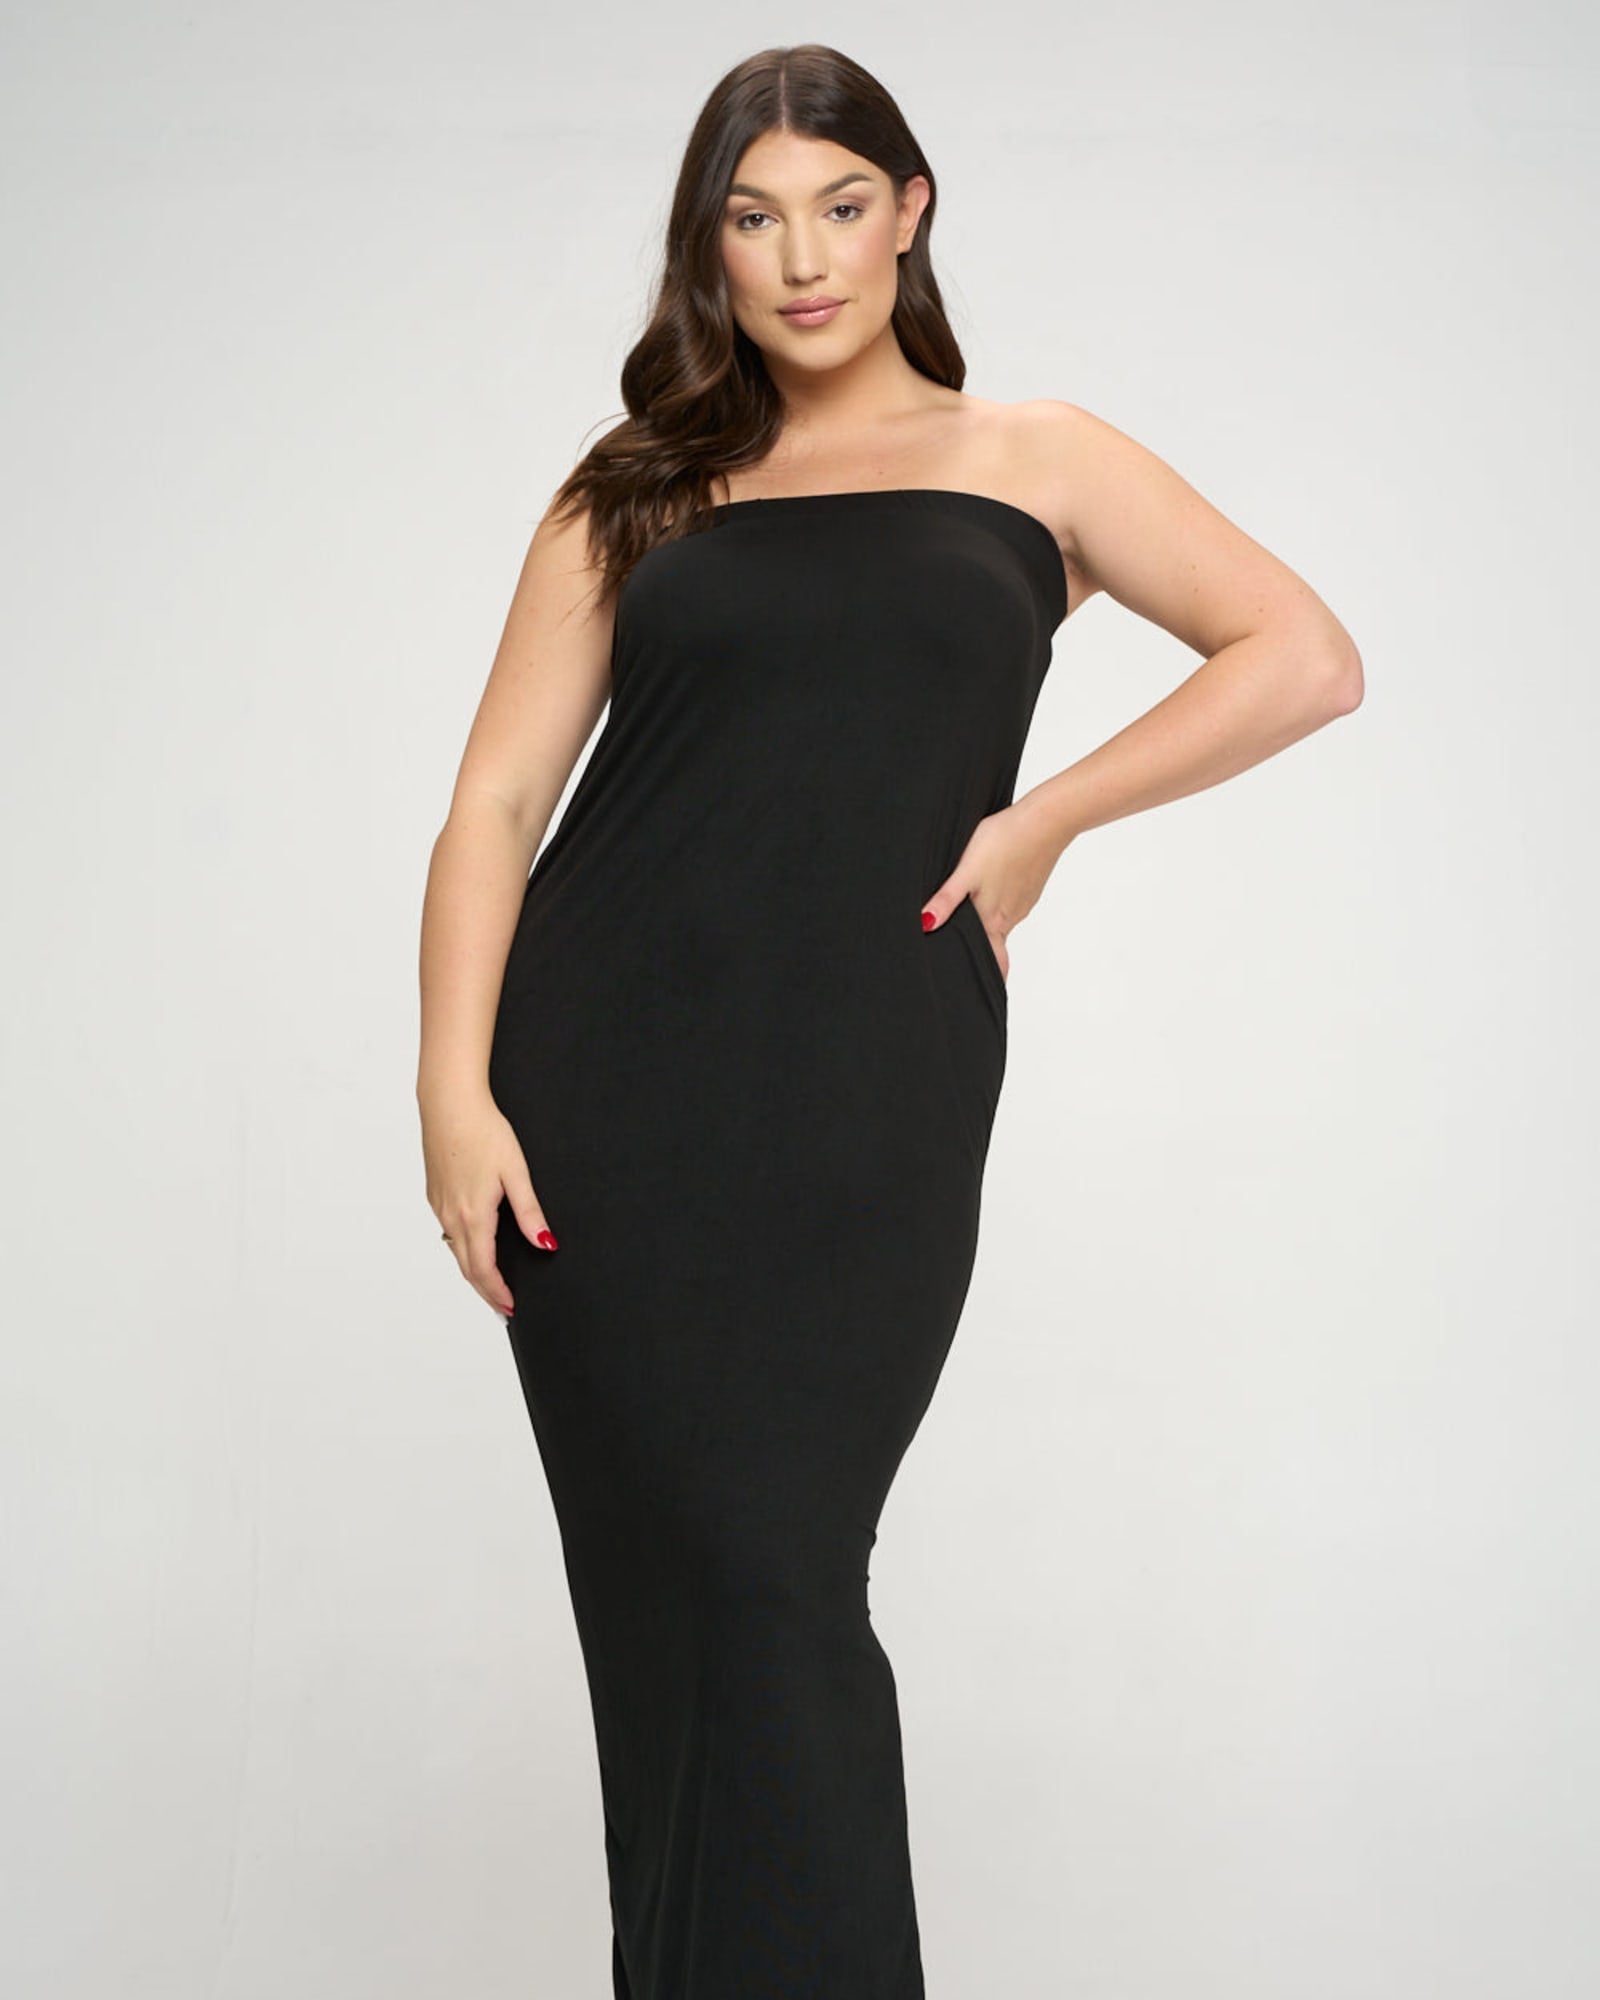 Plus Size Black Strapless Dress